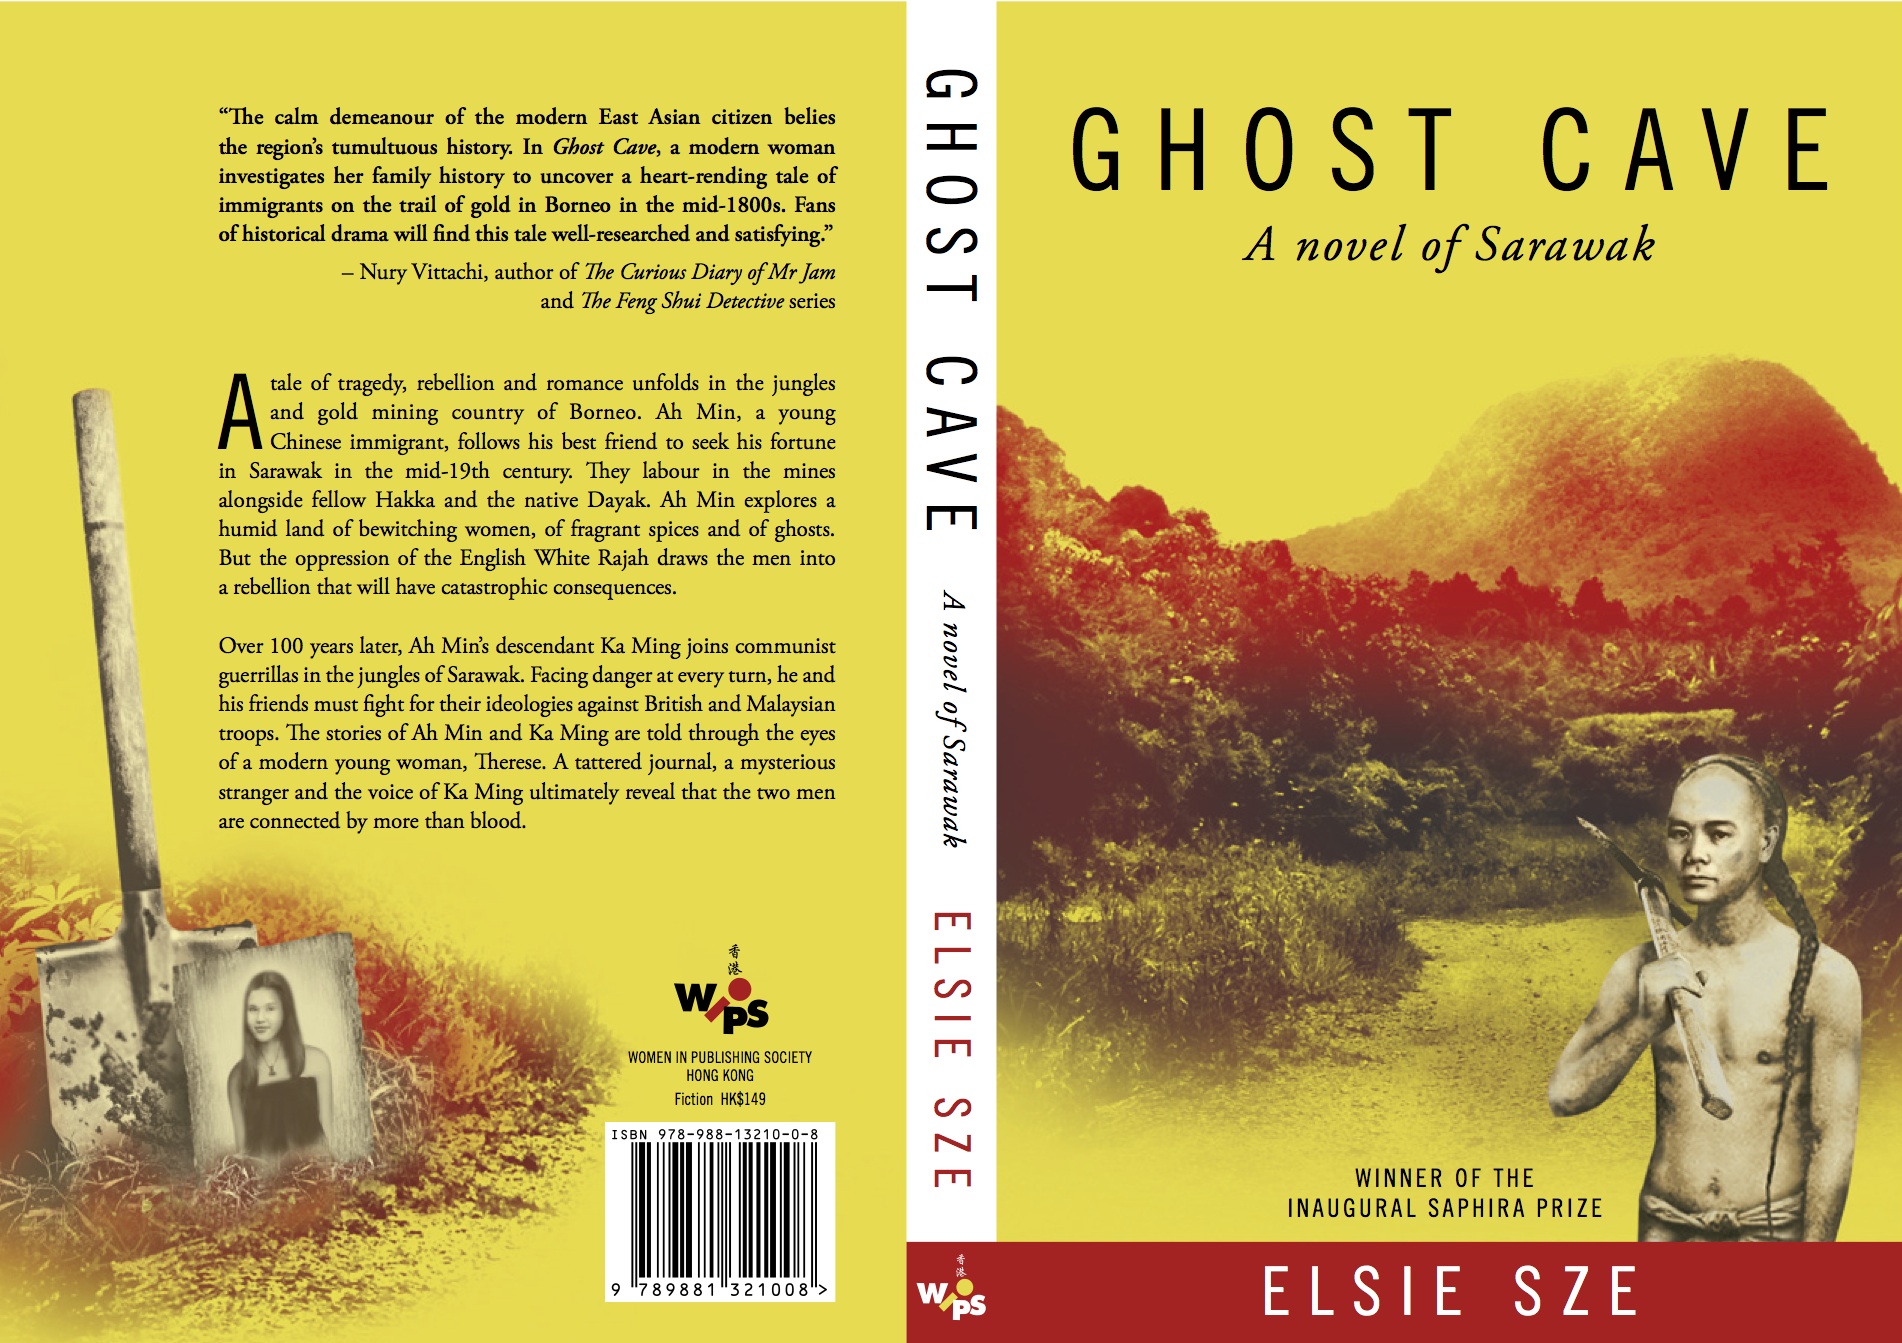 Ghost Cave: a novel of Sarawaka